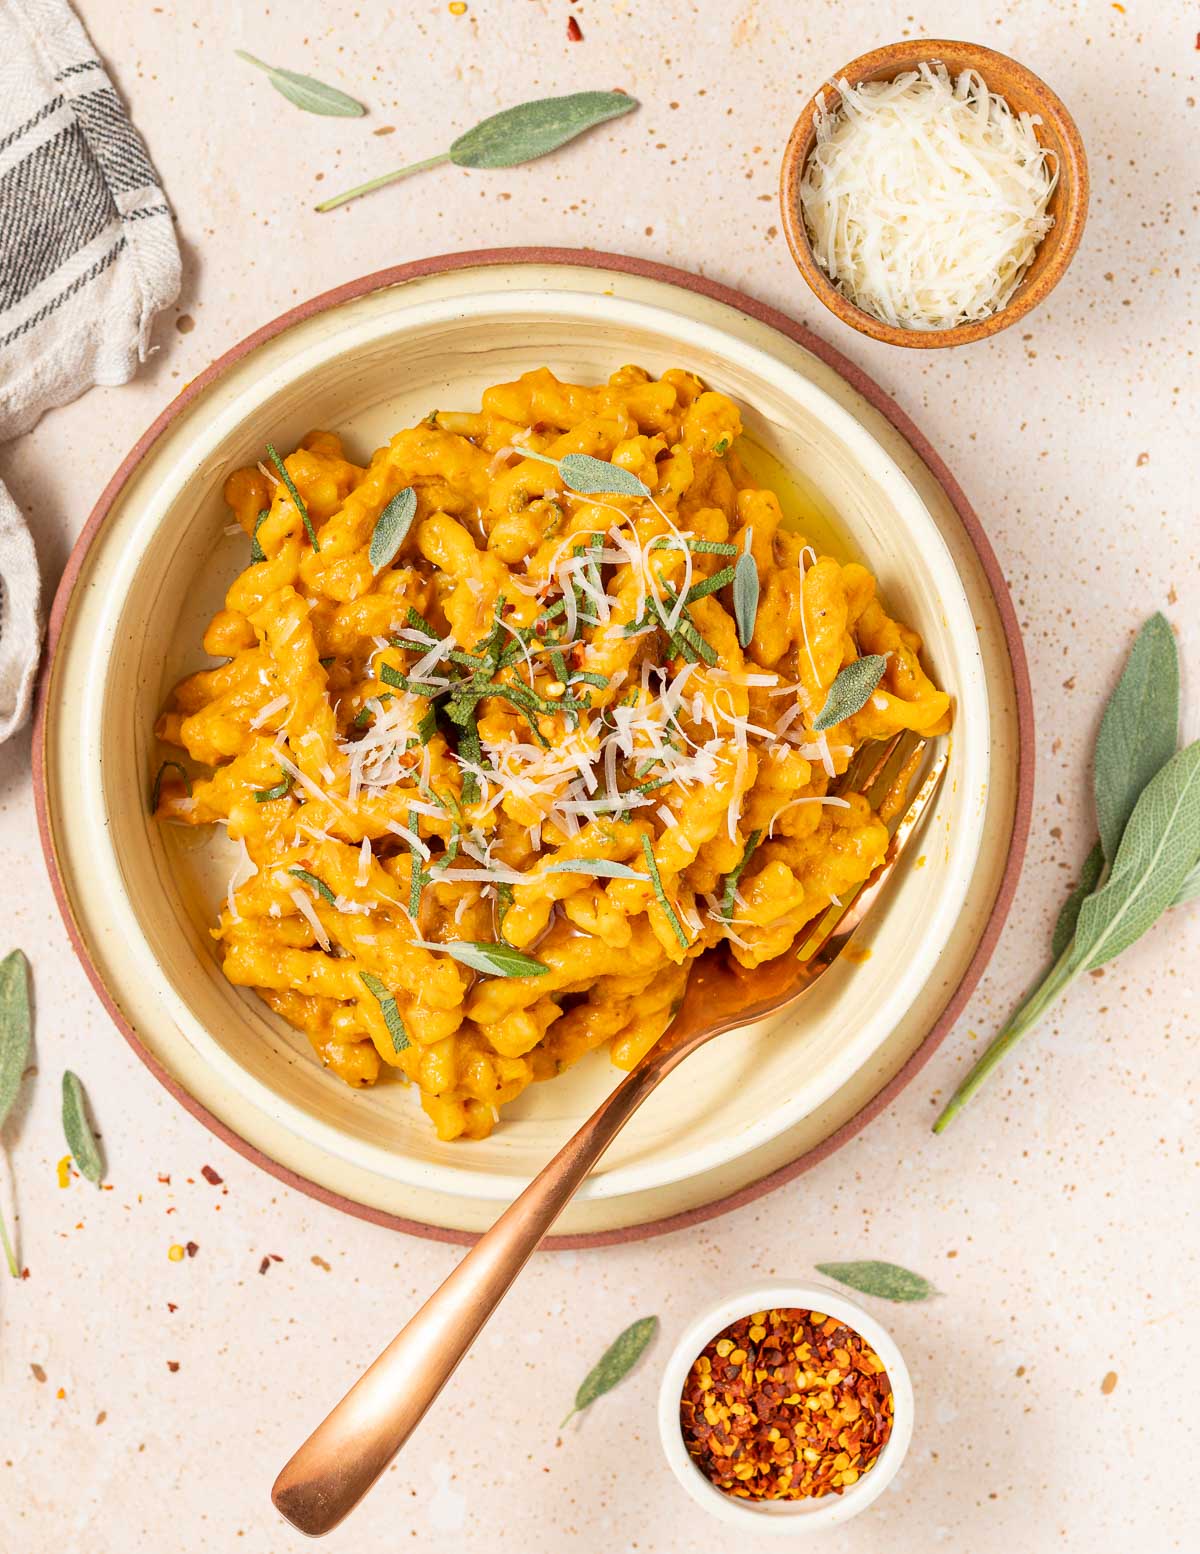 a bowl of pasta with vegan parmesan and shredded sage garnish 